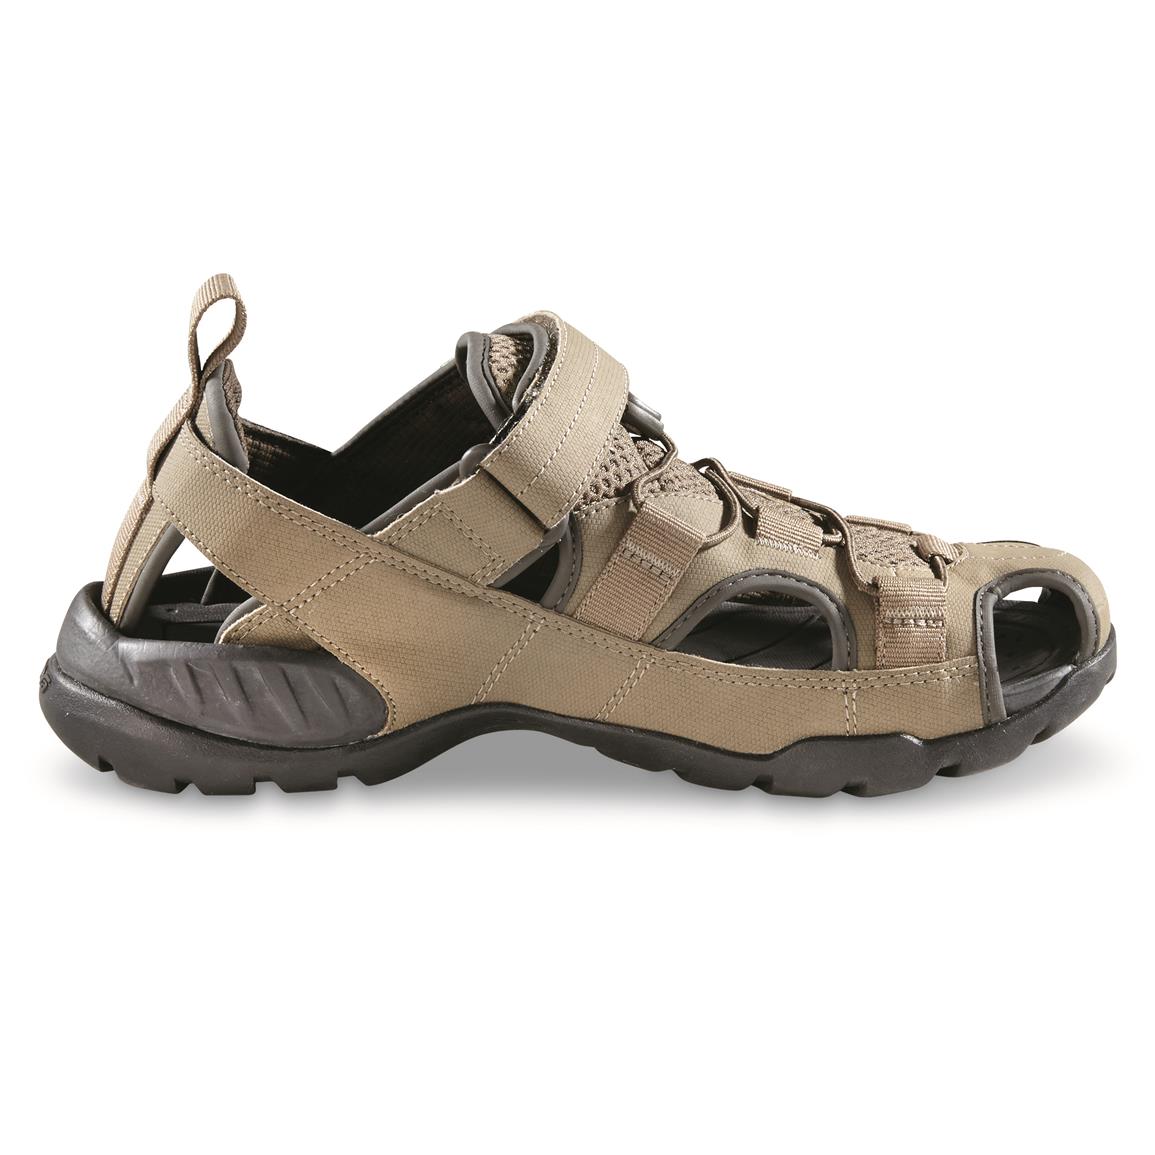 Teva Men's Forebay II Sandals - 676031, Sandals & Flip Flops at ...